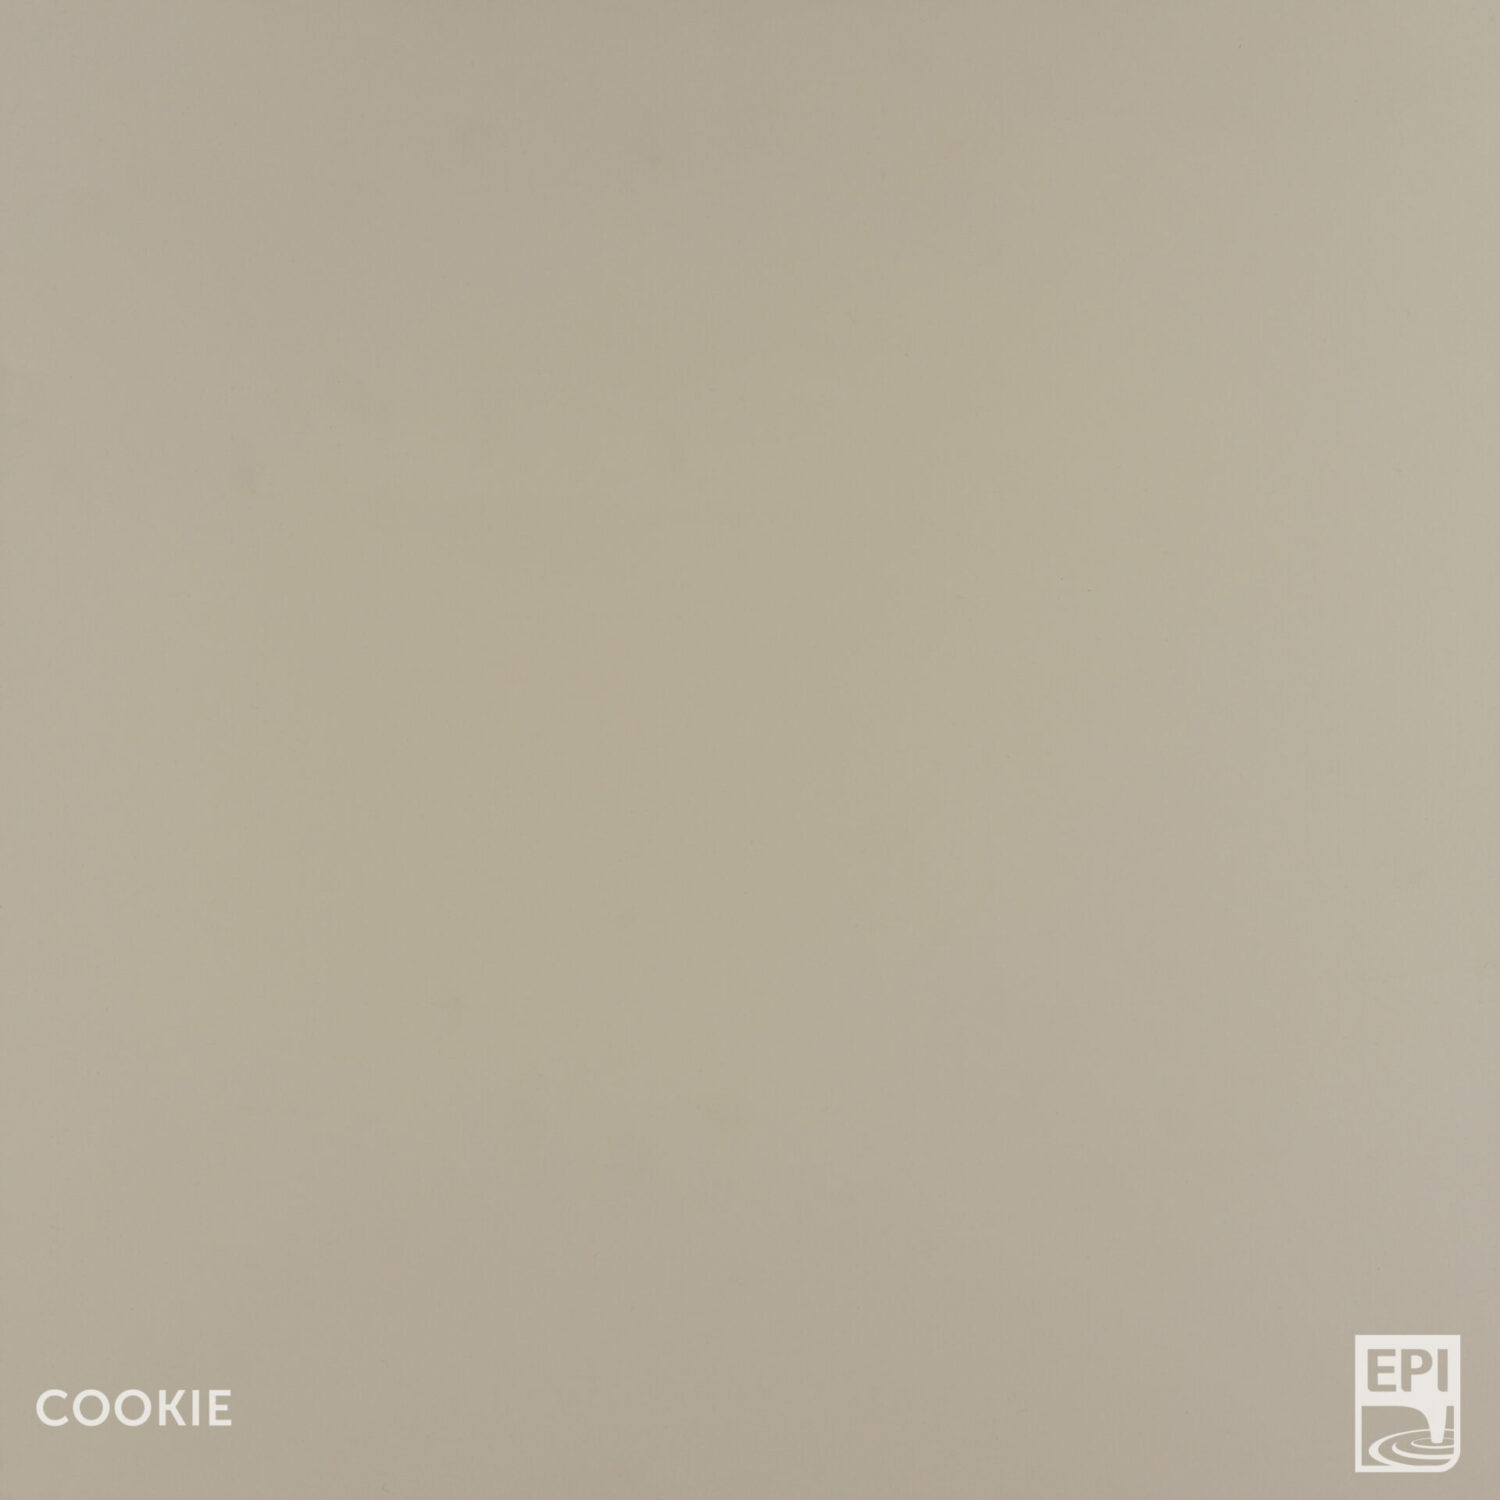 EPI Solid Cookie